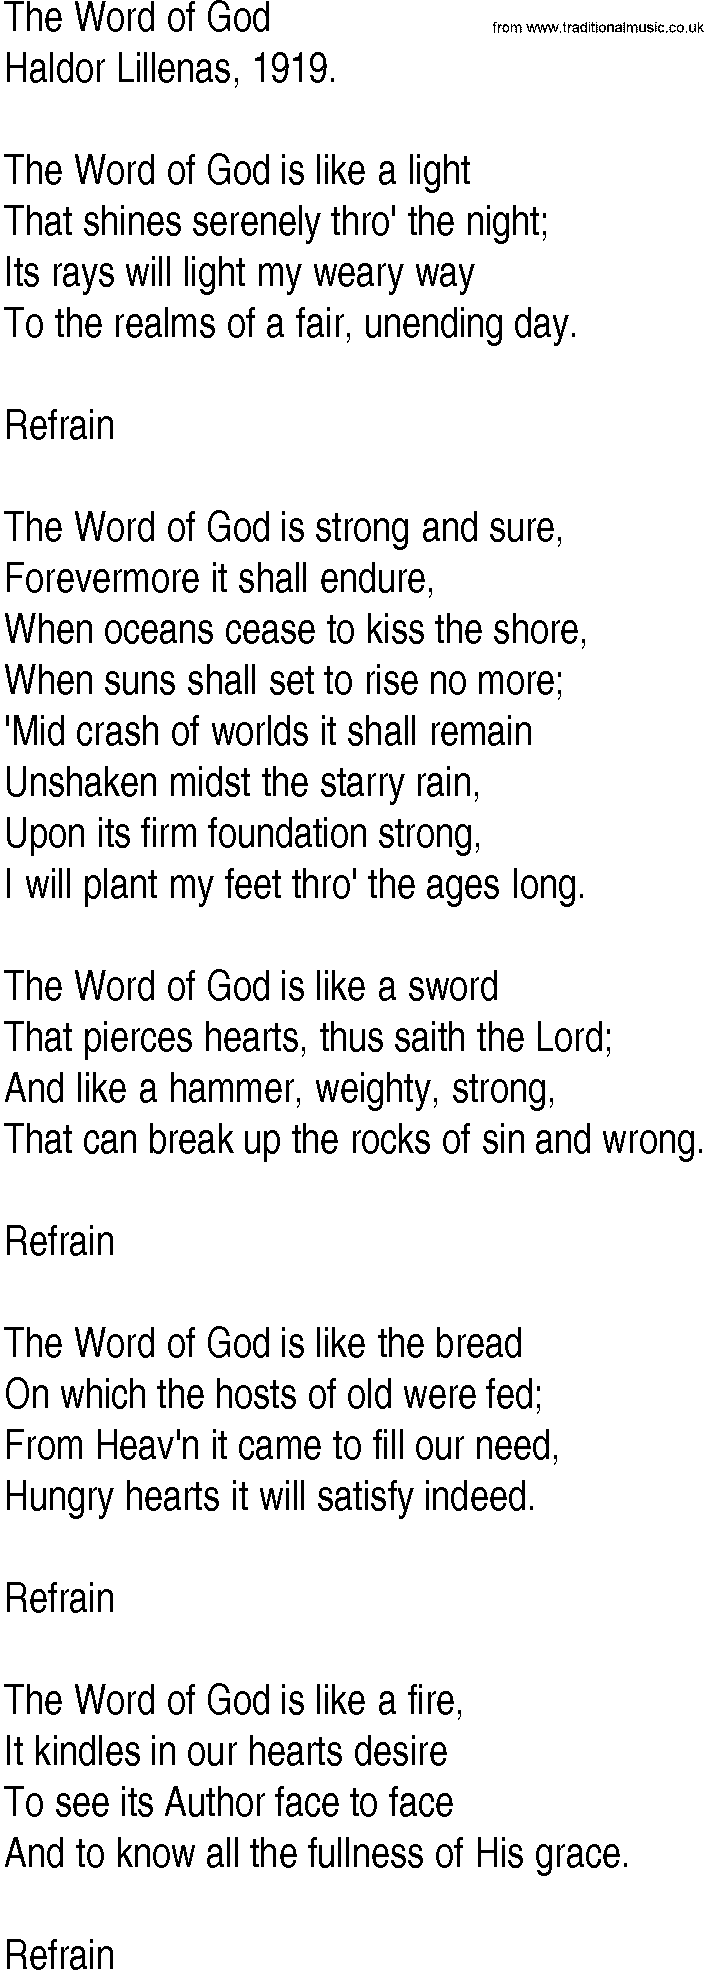 Hymn and Gospel Song: The Word of God by Haldor Lillenas lyrics